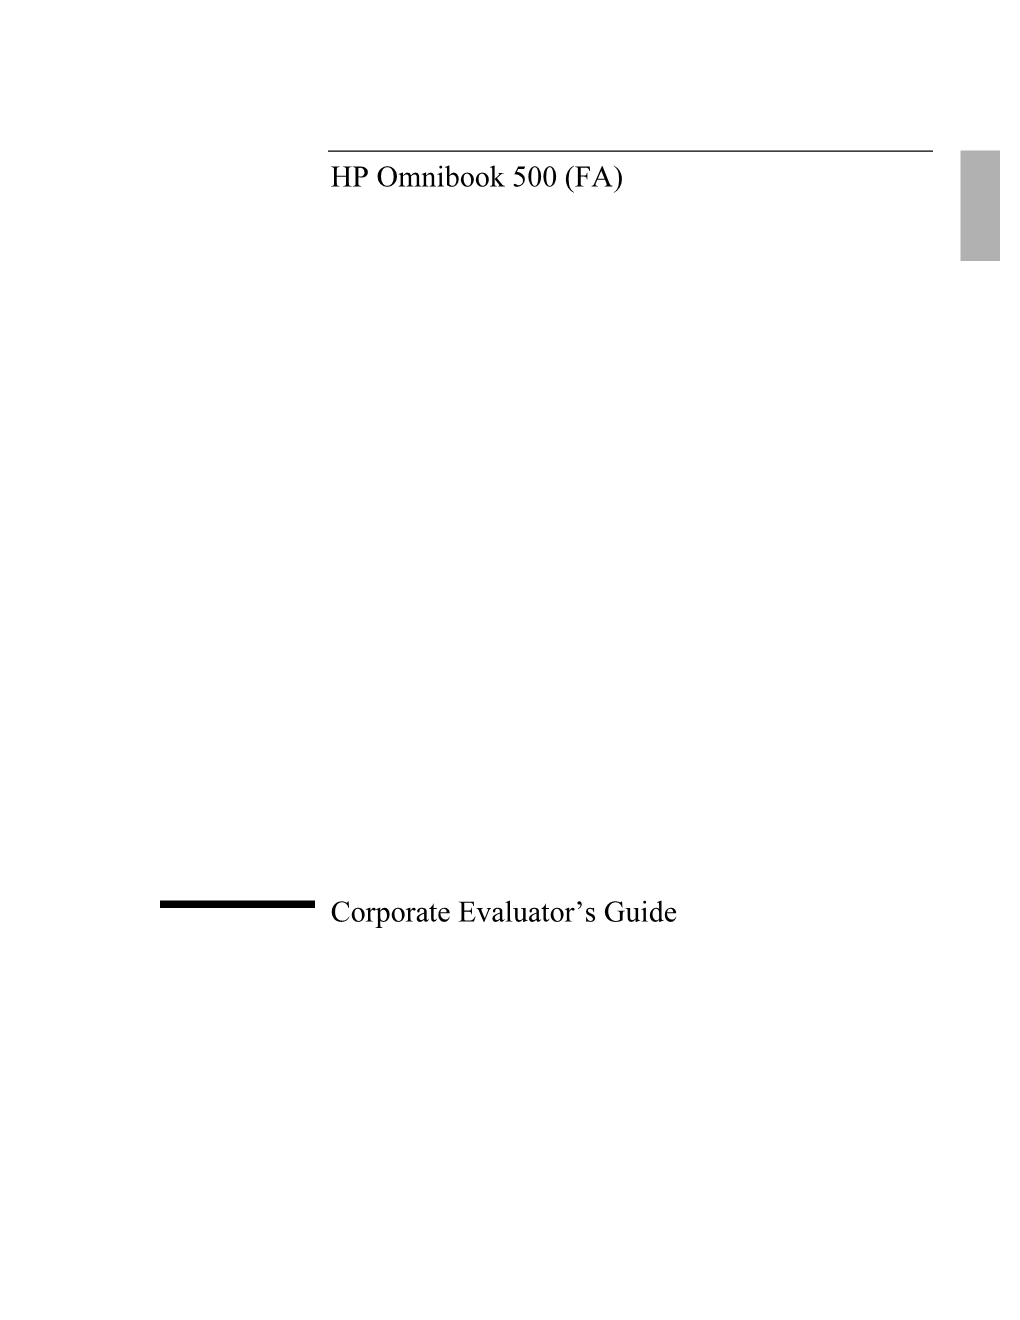 HP Omnibook 500 (FA) Corporate Evaluator's Guide